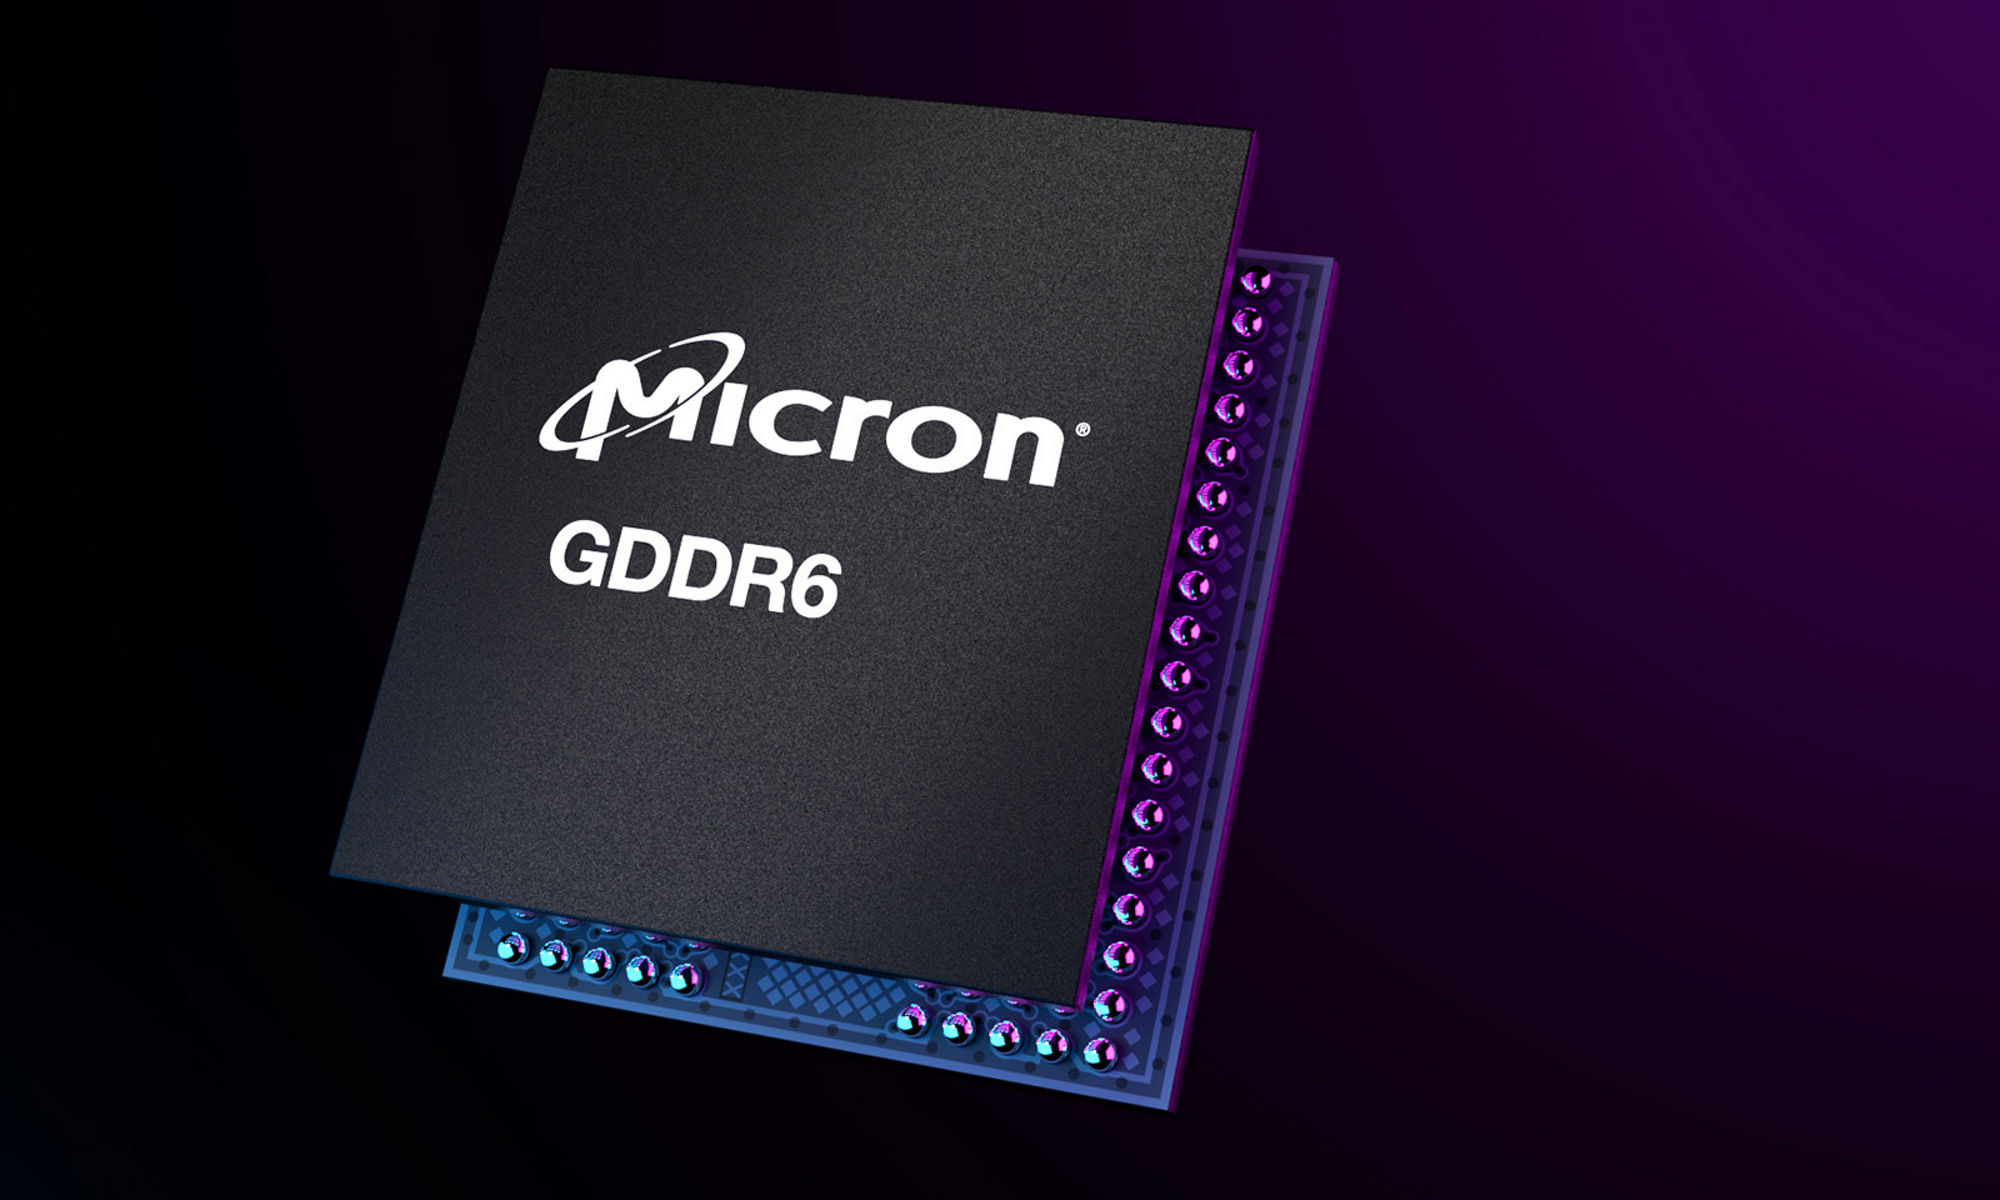 Micron GDDR6 microchip